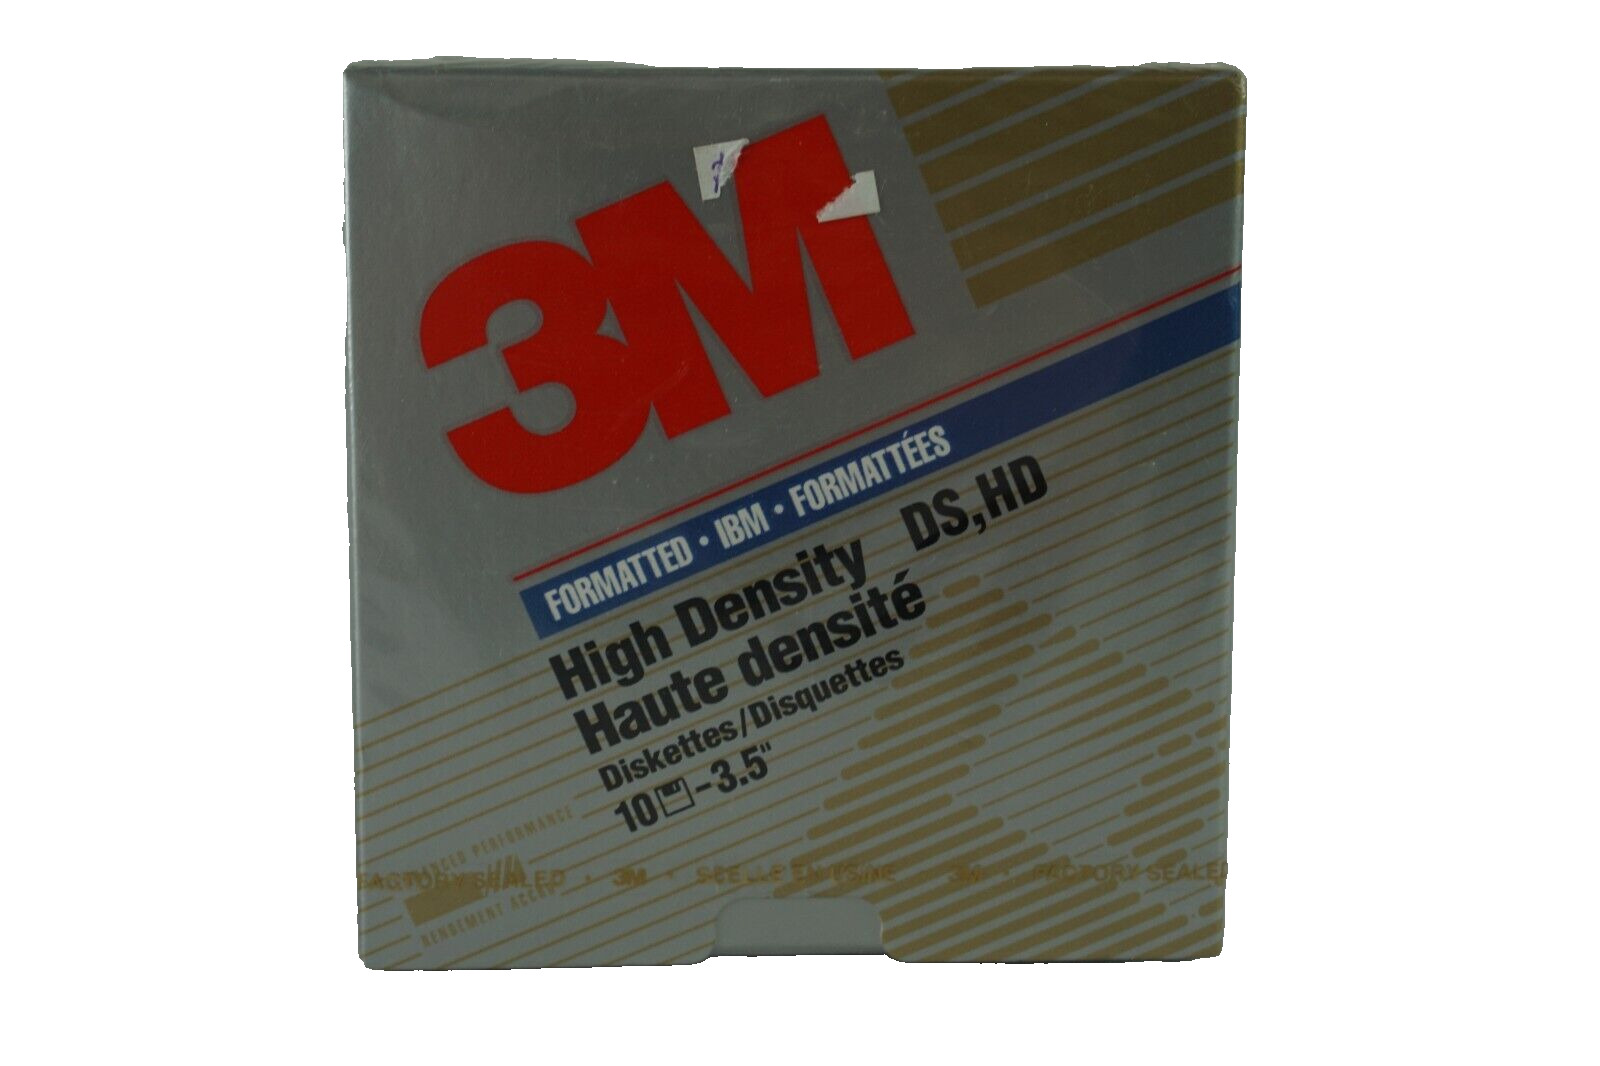 3m High Density 3.5in. Floppy Disk (12881) New Sealed.